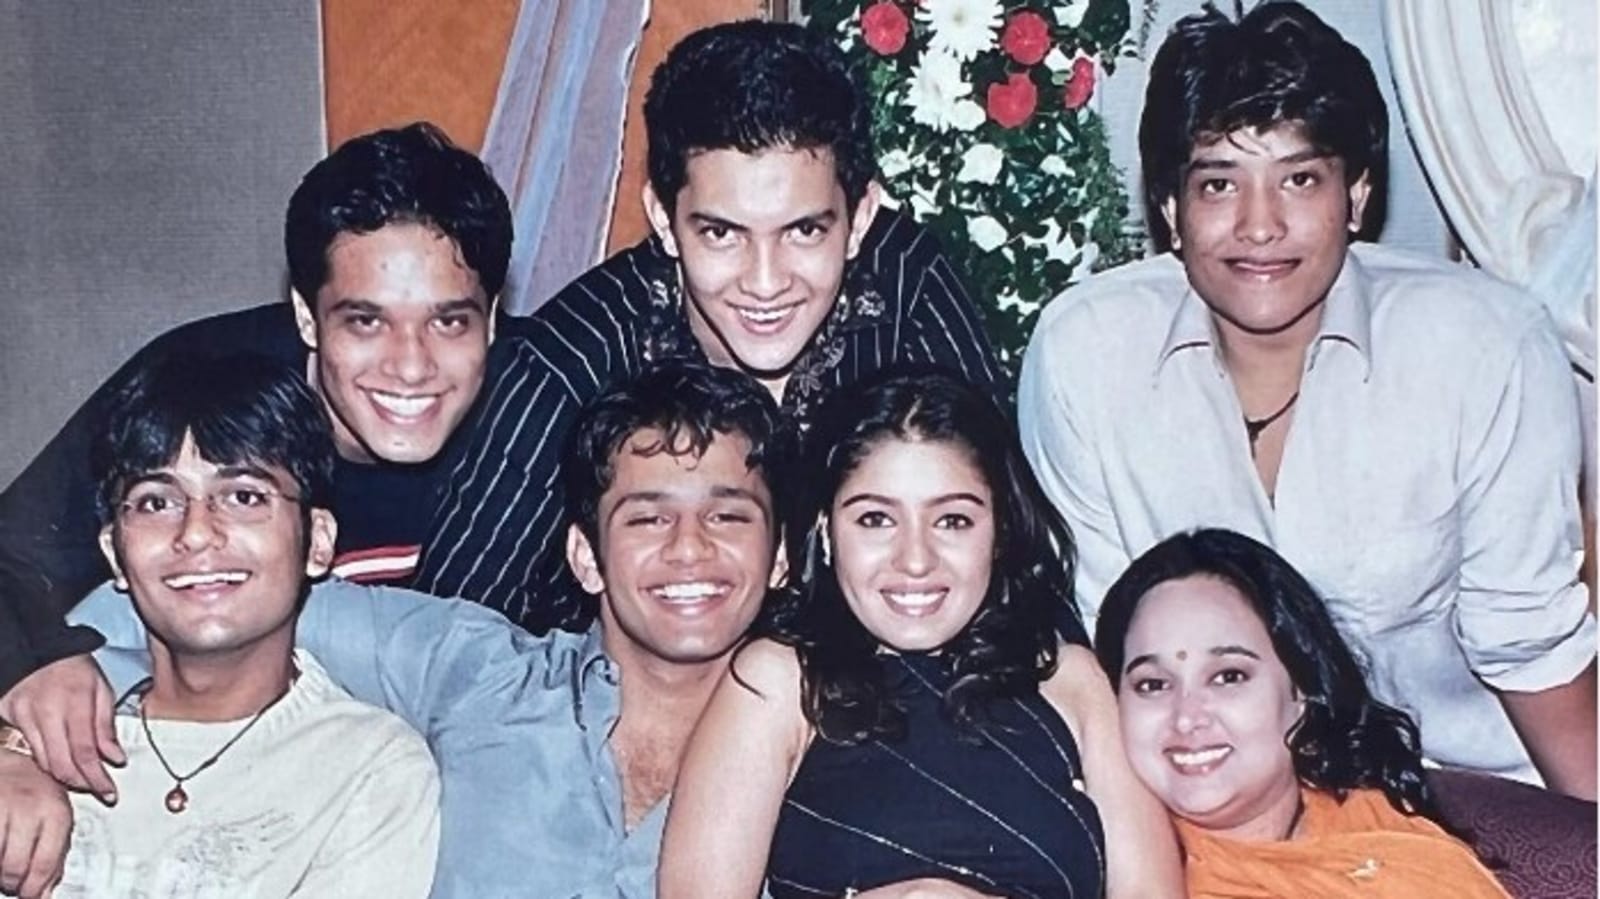 Sunidhi Chauhan poses with Rahul Vaidya, Aditya Narayan, in pics from her 2004 birthday; fans call them ‘priceless’